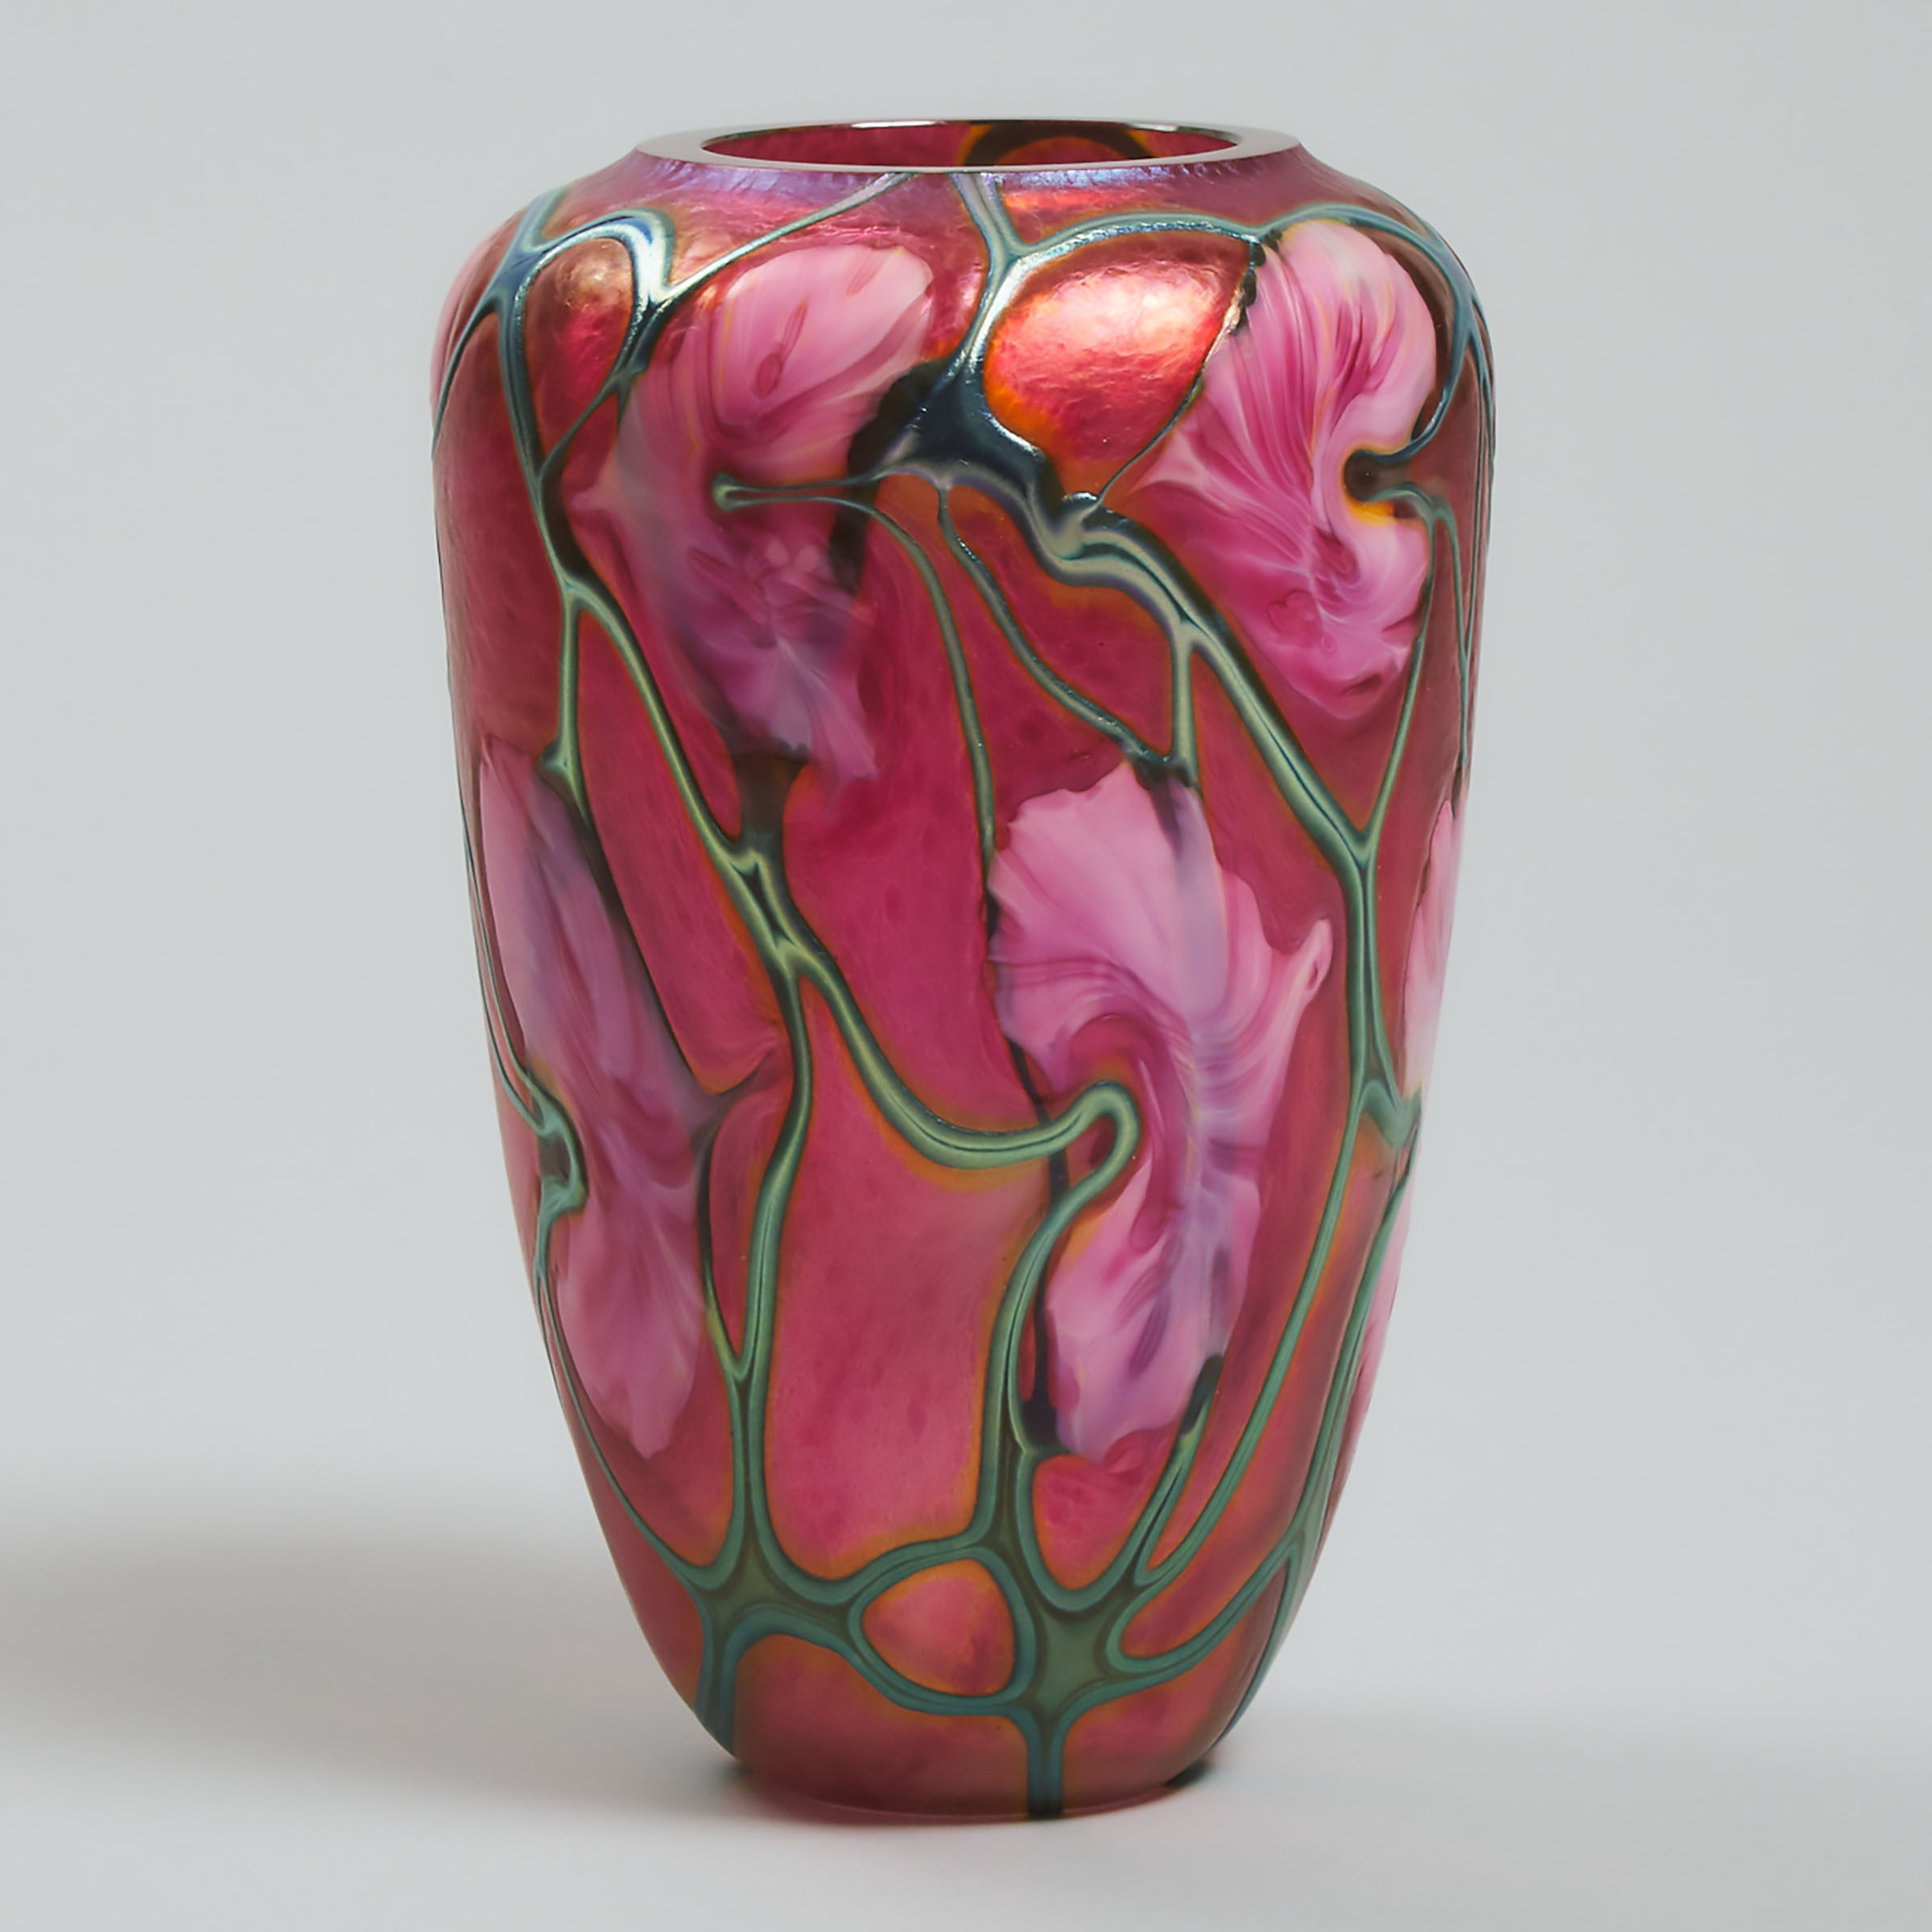 John Lotton (American, b.1964), Iridescent 'Vine and Leaf' Glass Vase, 1992